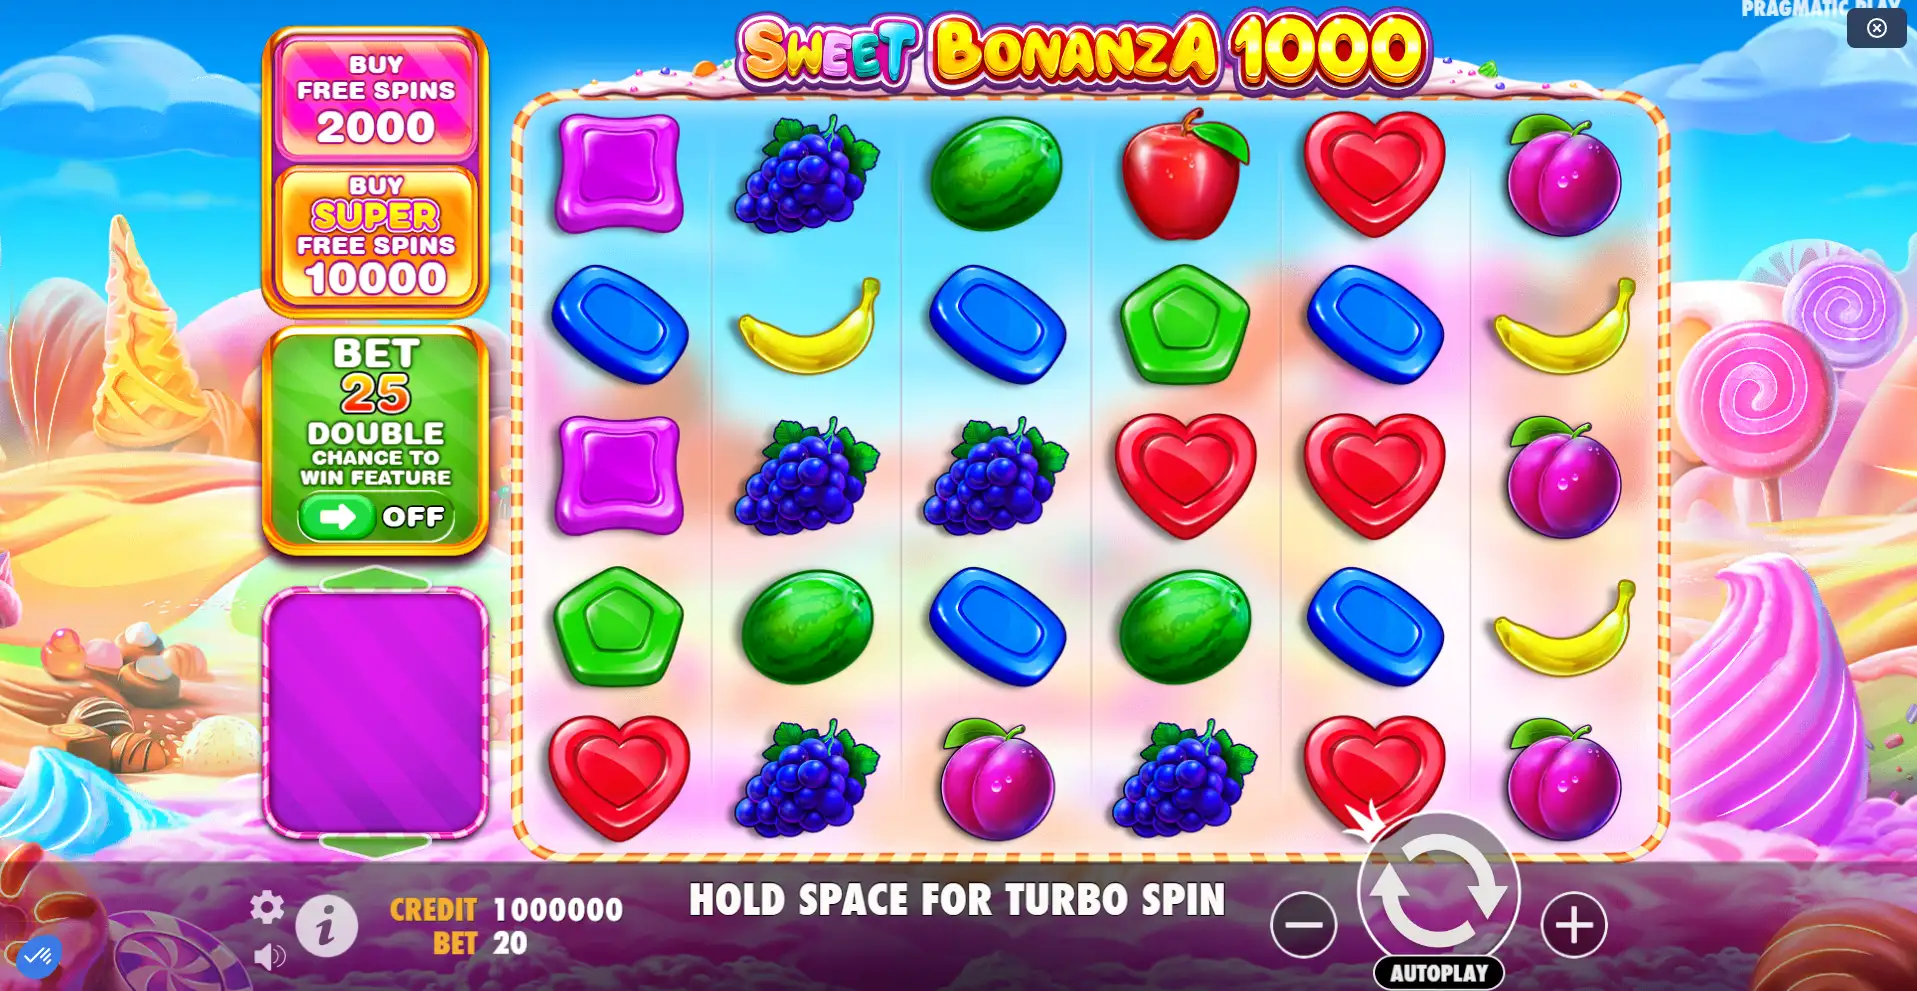 Sweet bonanza slots 1000